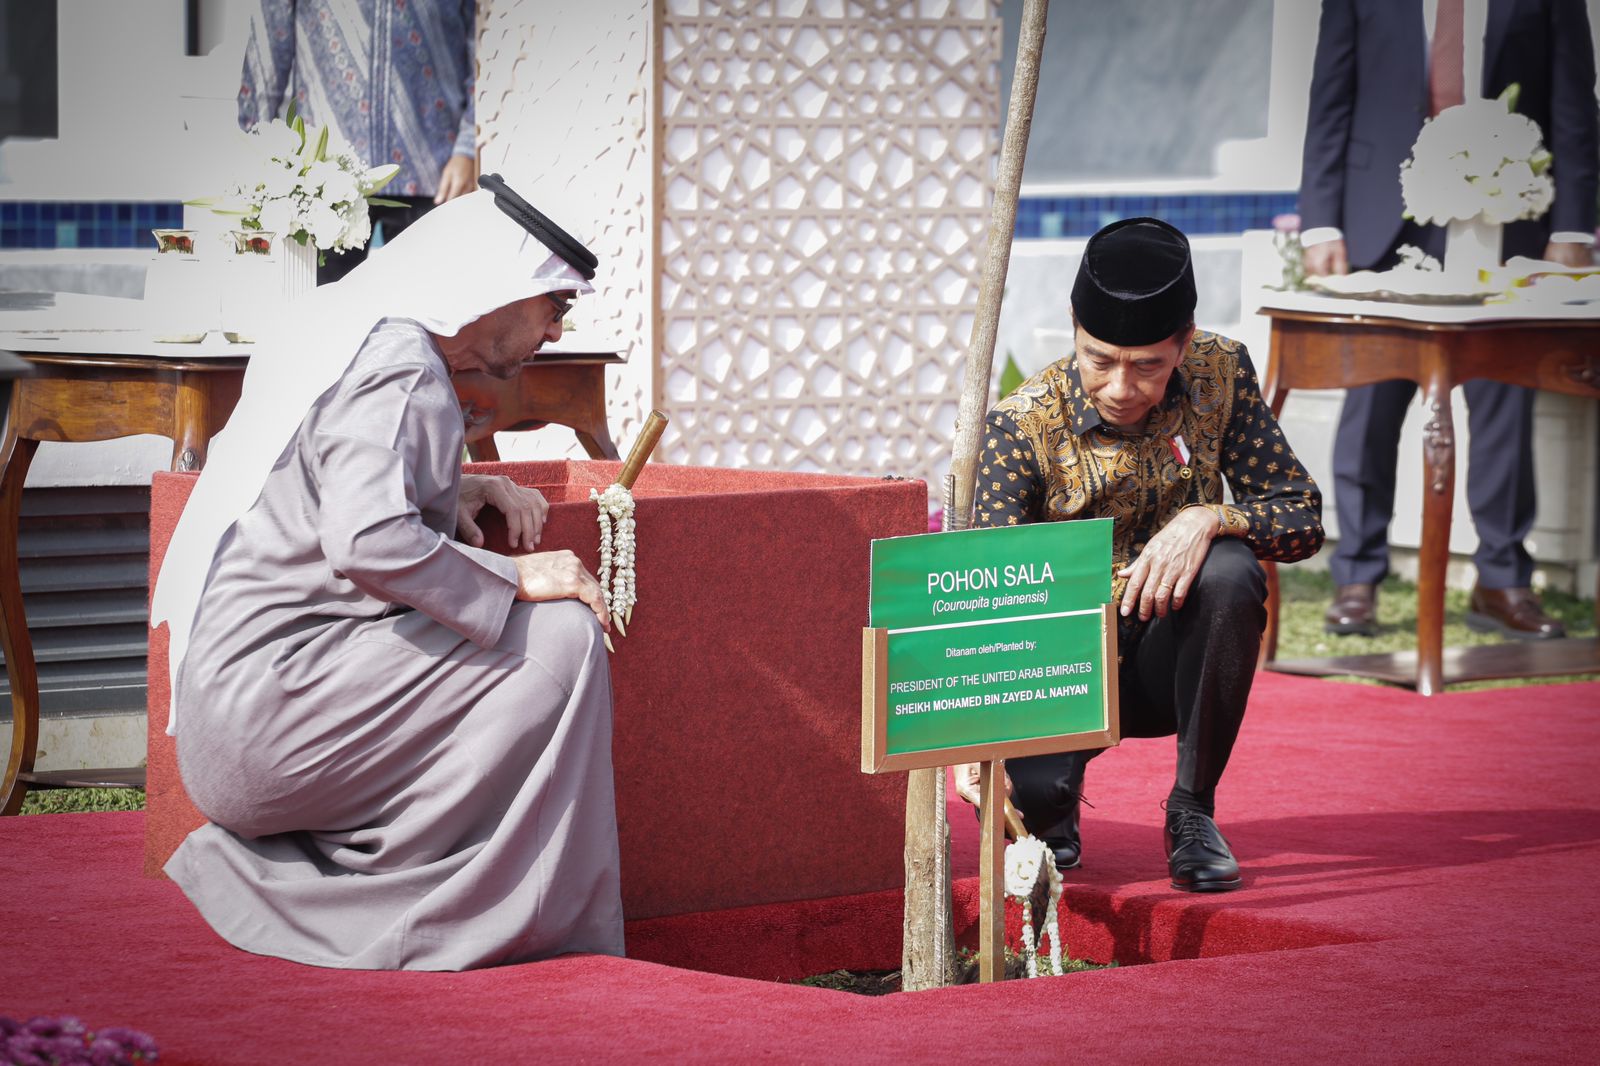 Masjid Sheikh Zayed Solo Akan Dikelola Profesional, jadi Contoh Tata Kelola di Indonesia